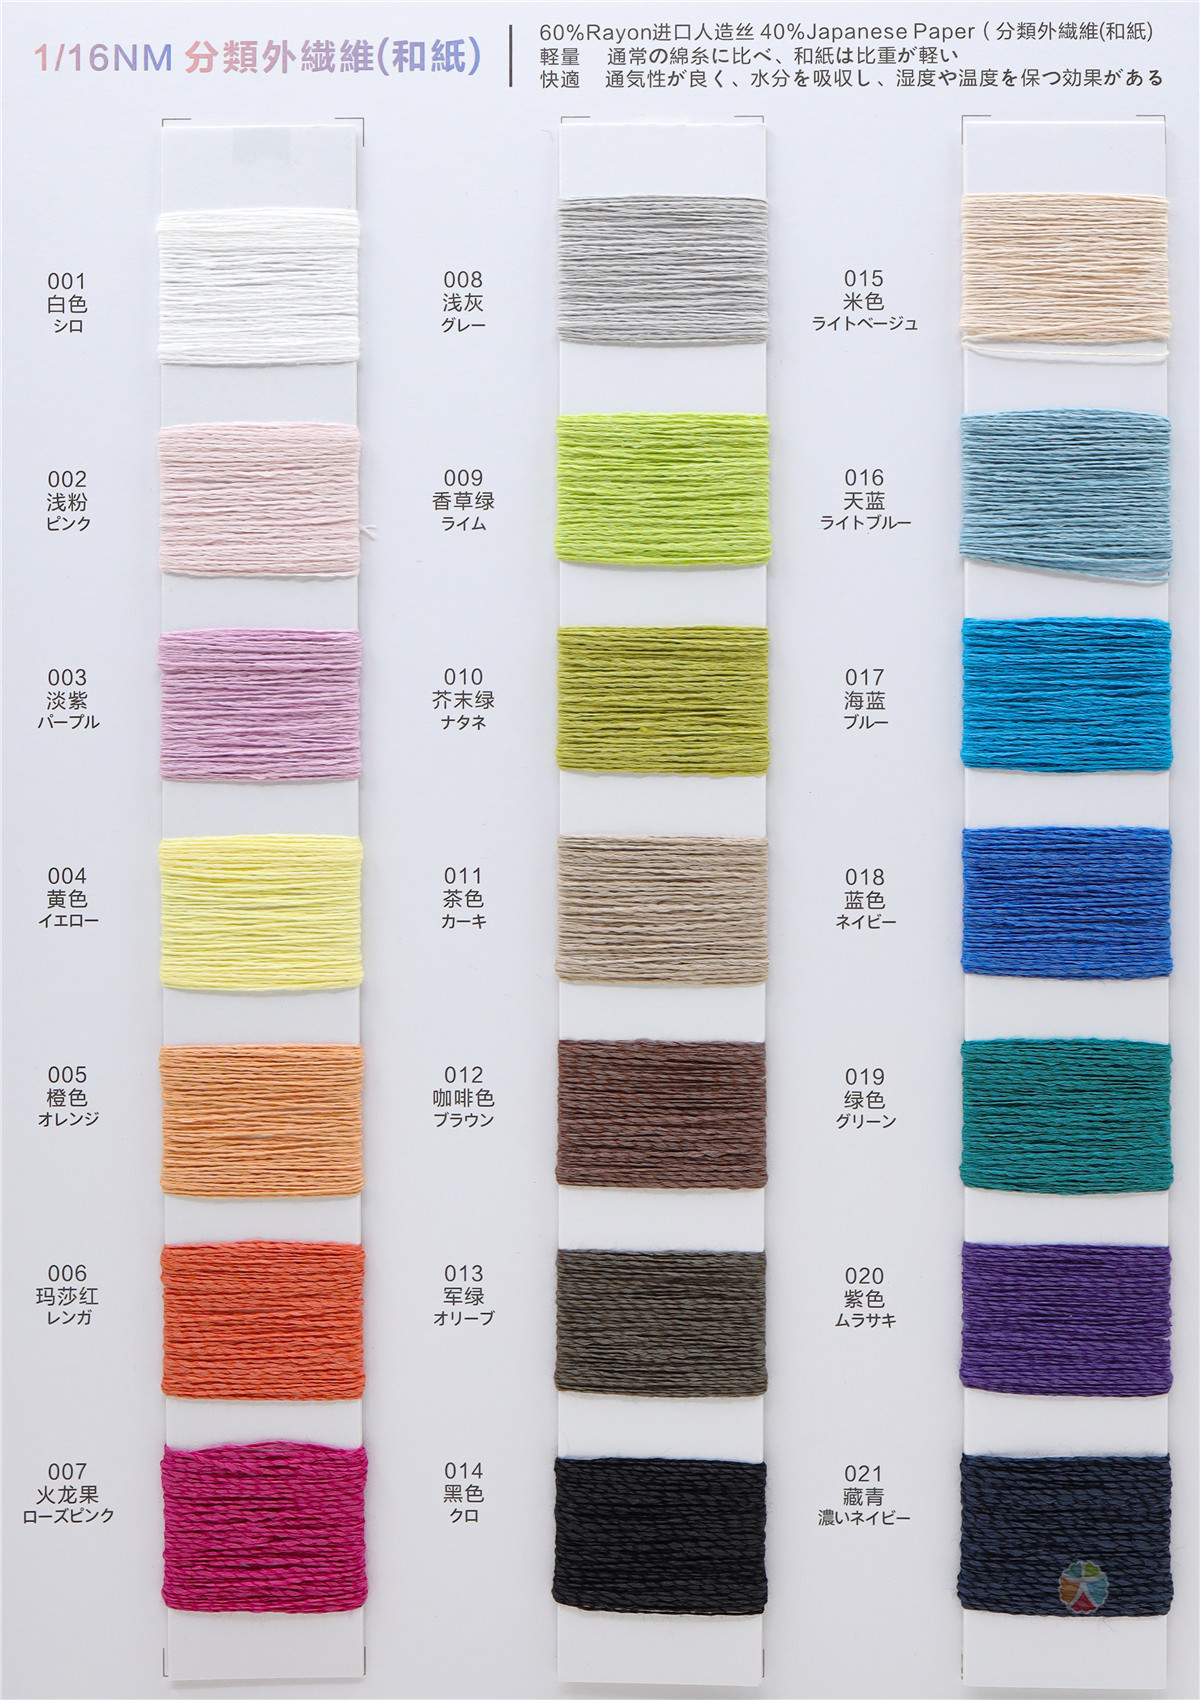 1/16NM 60%Rayon进口人造丝 40%Japanese Paper（分類外繊維(和紙)